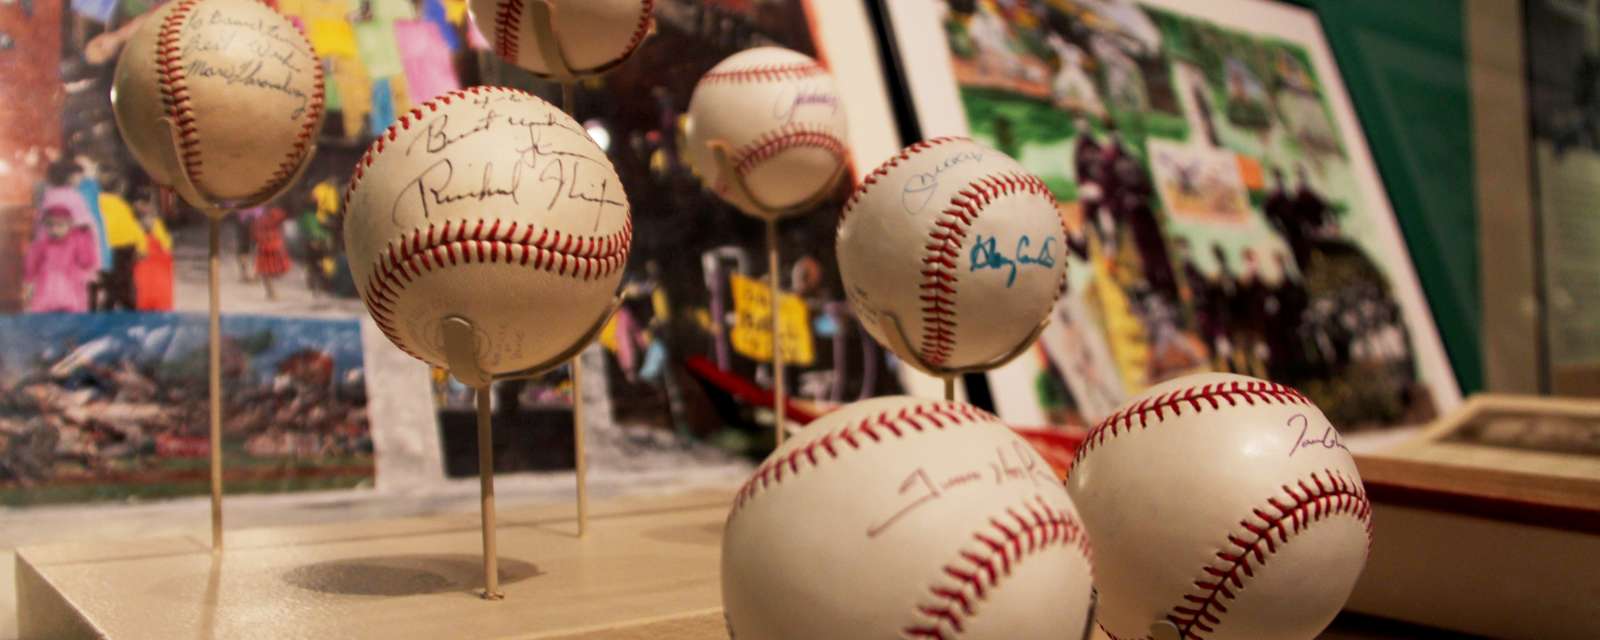 Autographed baseballs